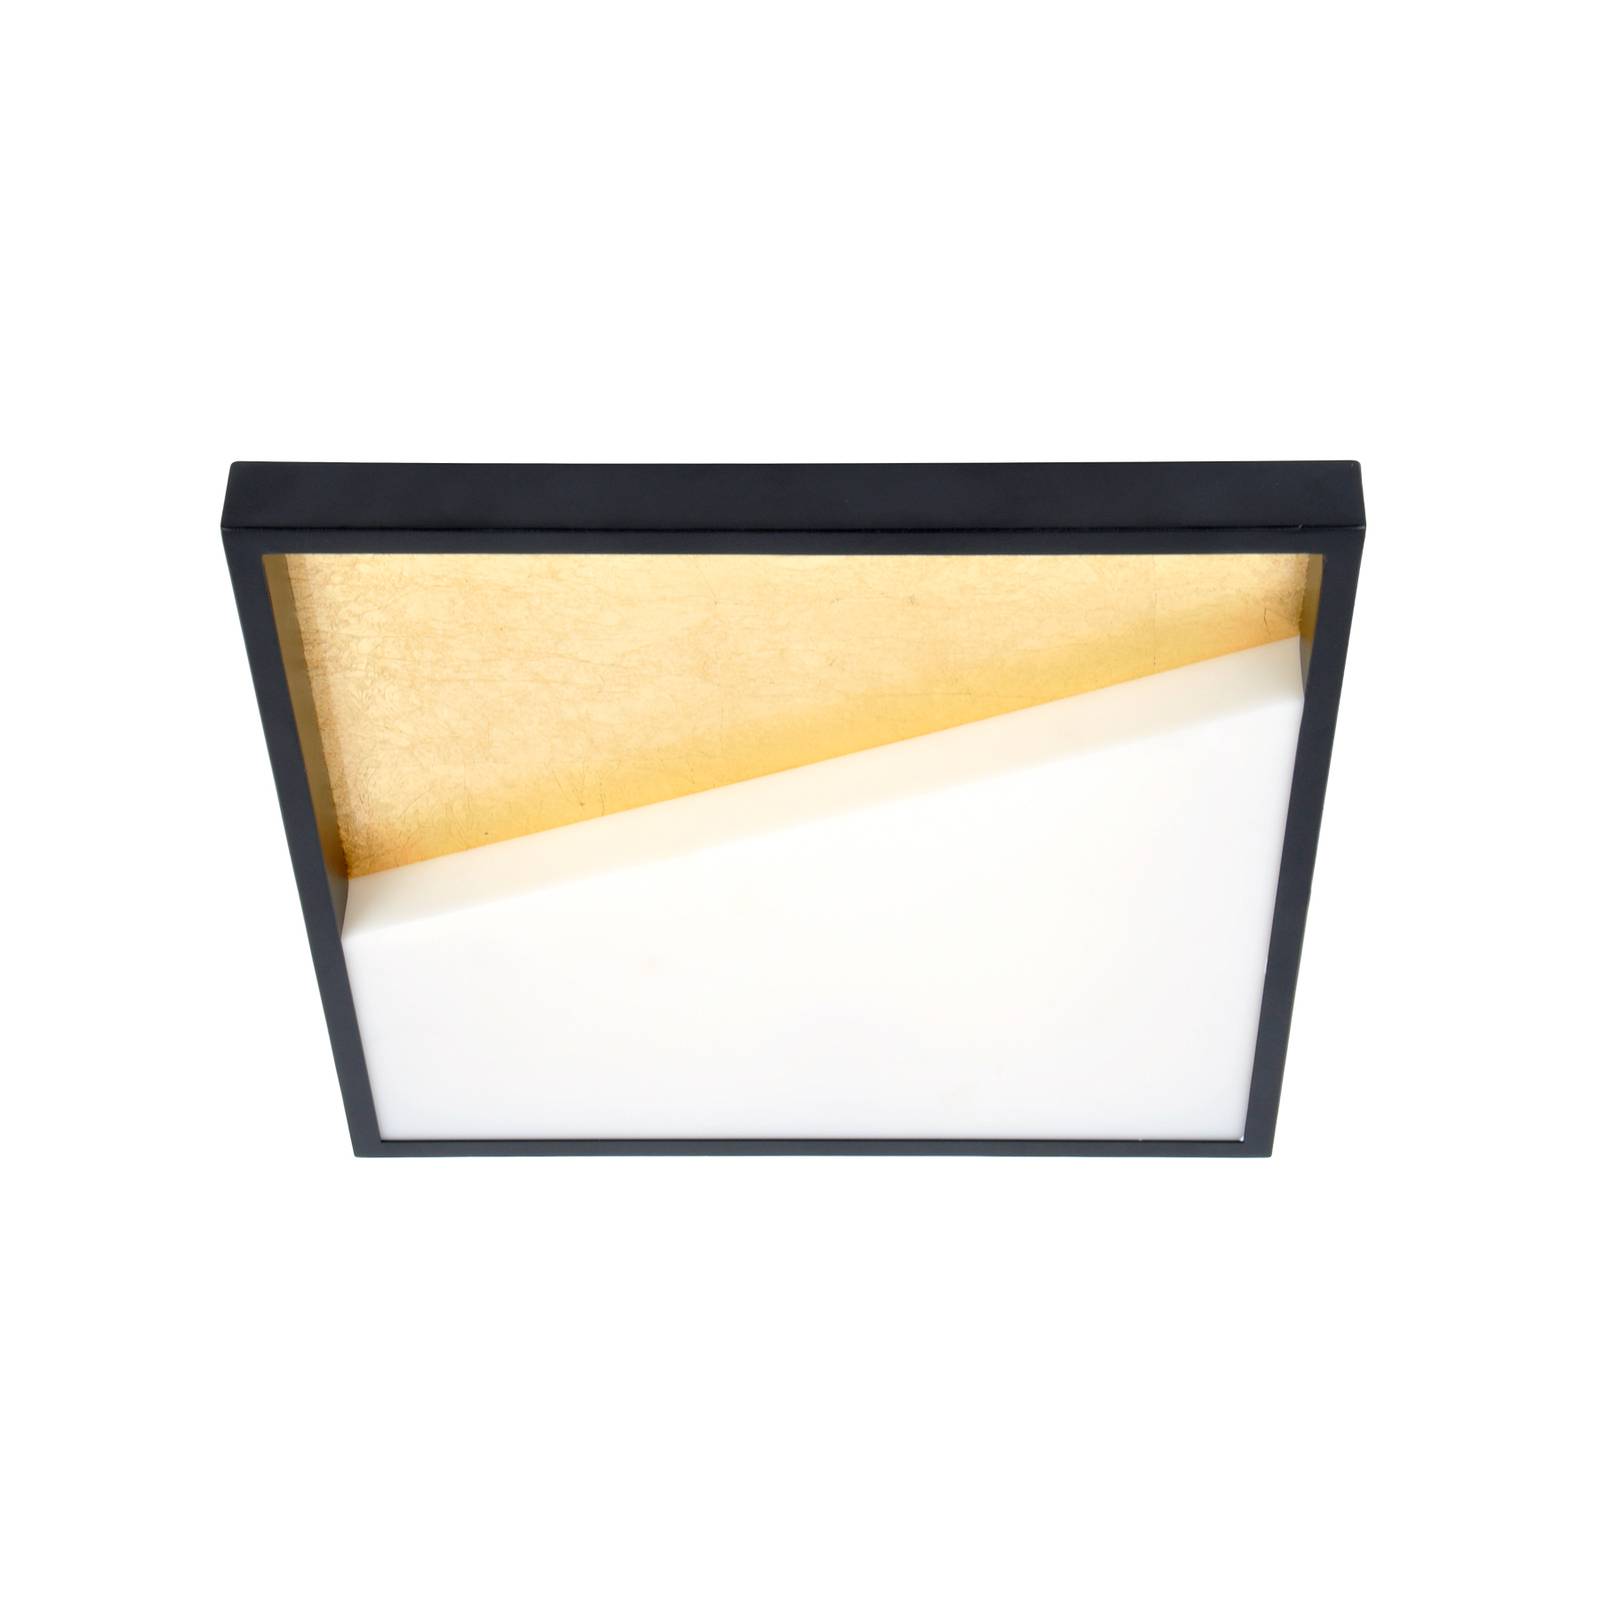 Eco-light vista led-es fali lámpa, arany/fekete, 40 x 40 cm